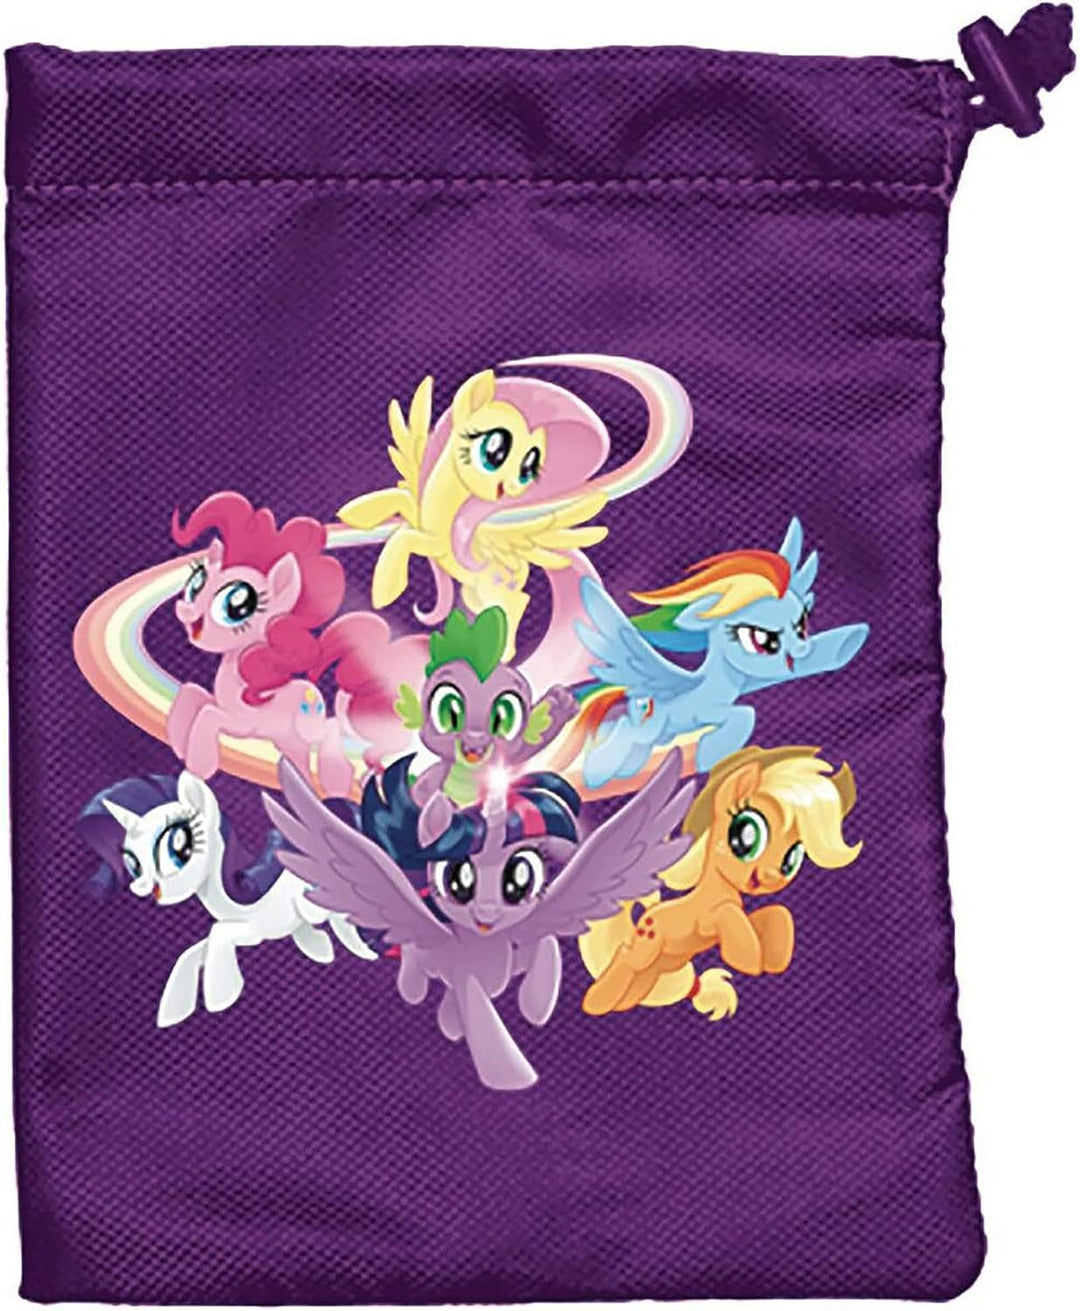 My Little Pony: RPG Dice Bag